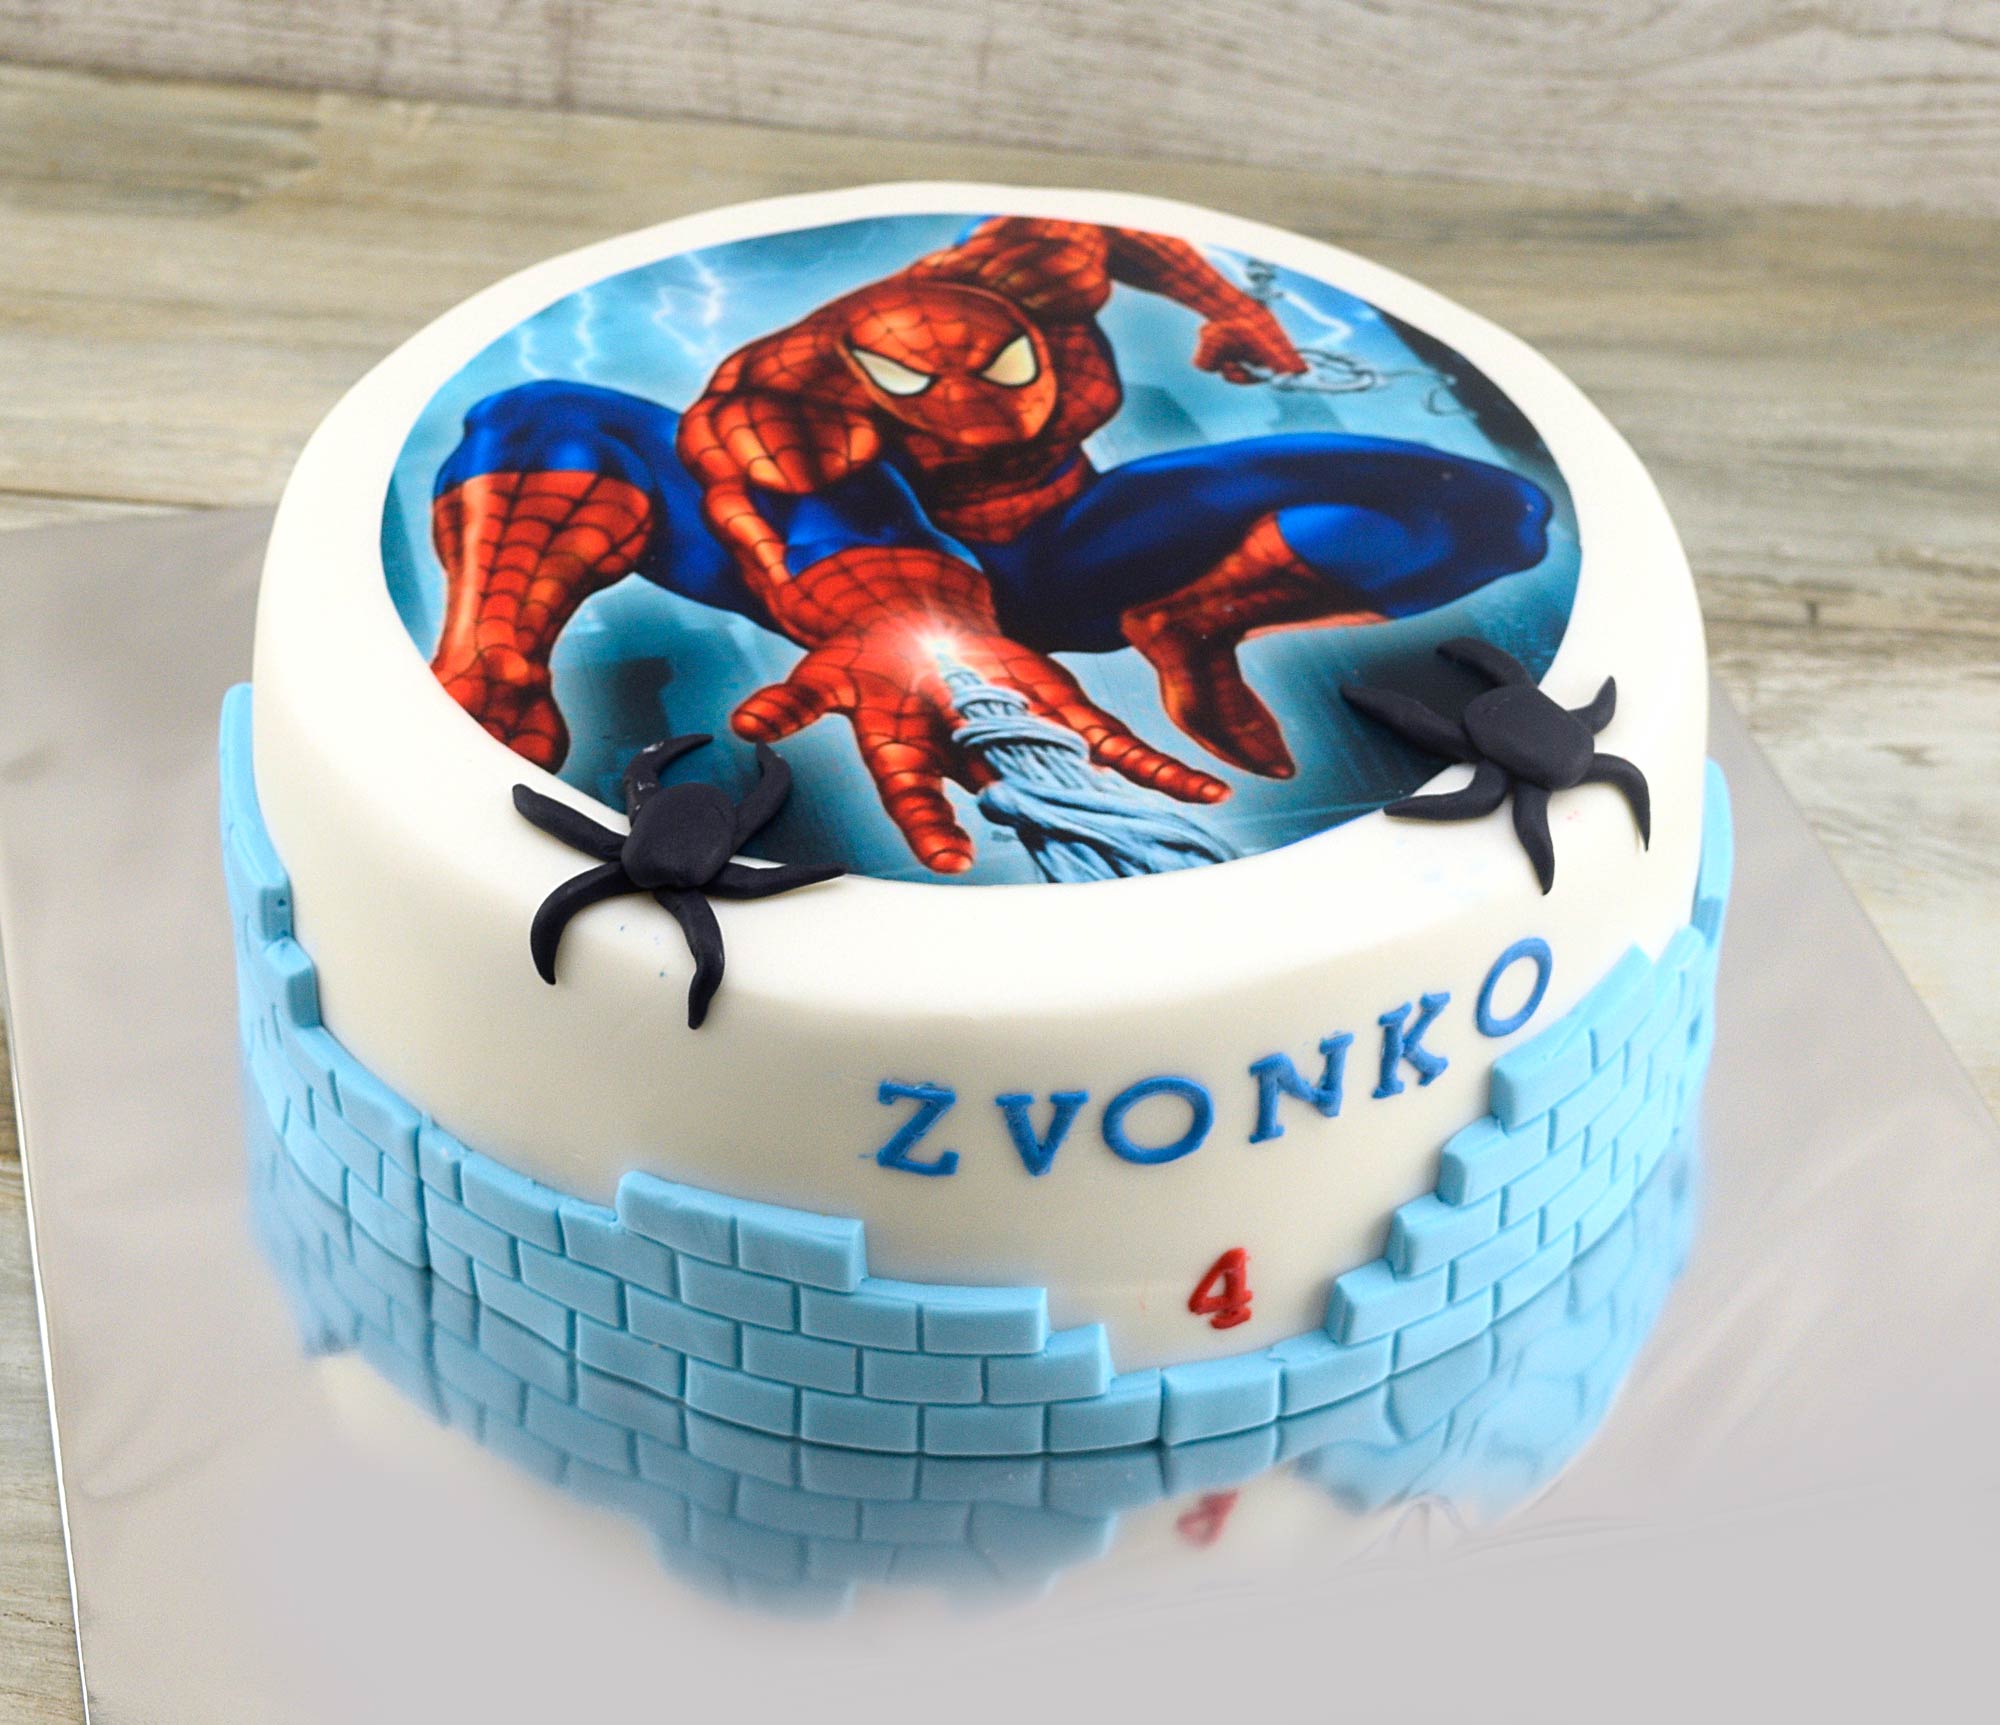 Narodeninova torta s jedlym obrazkom spiderman pre chlapca